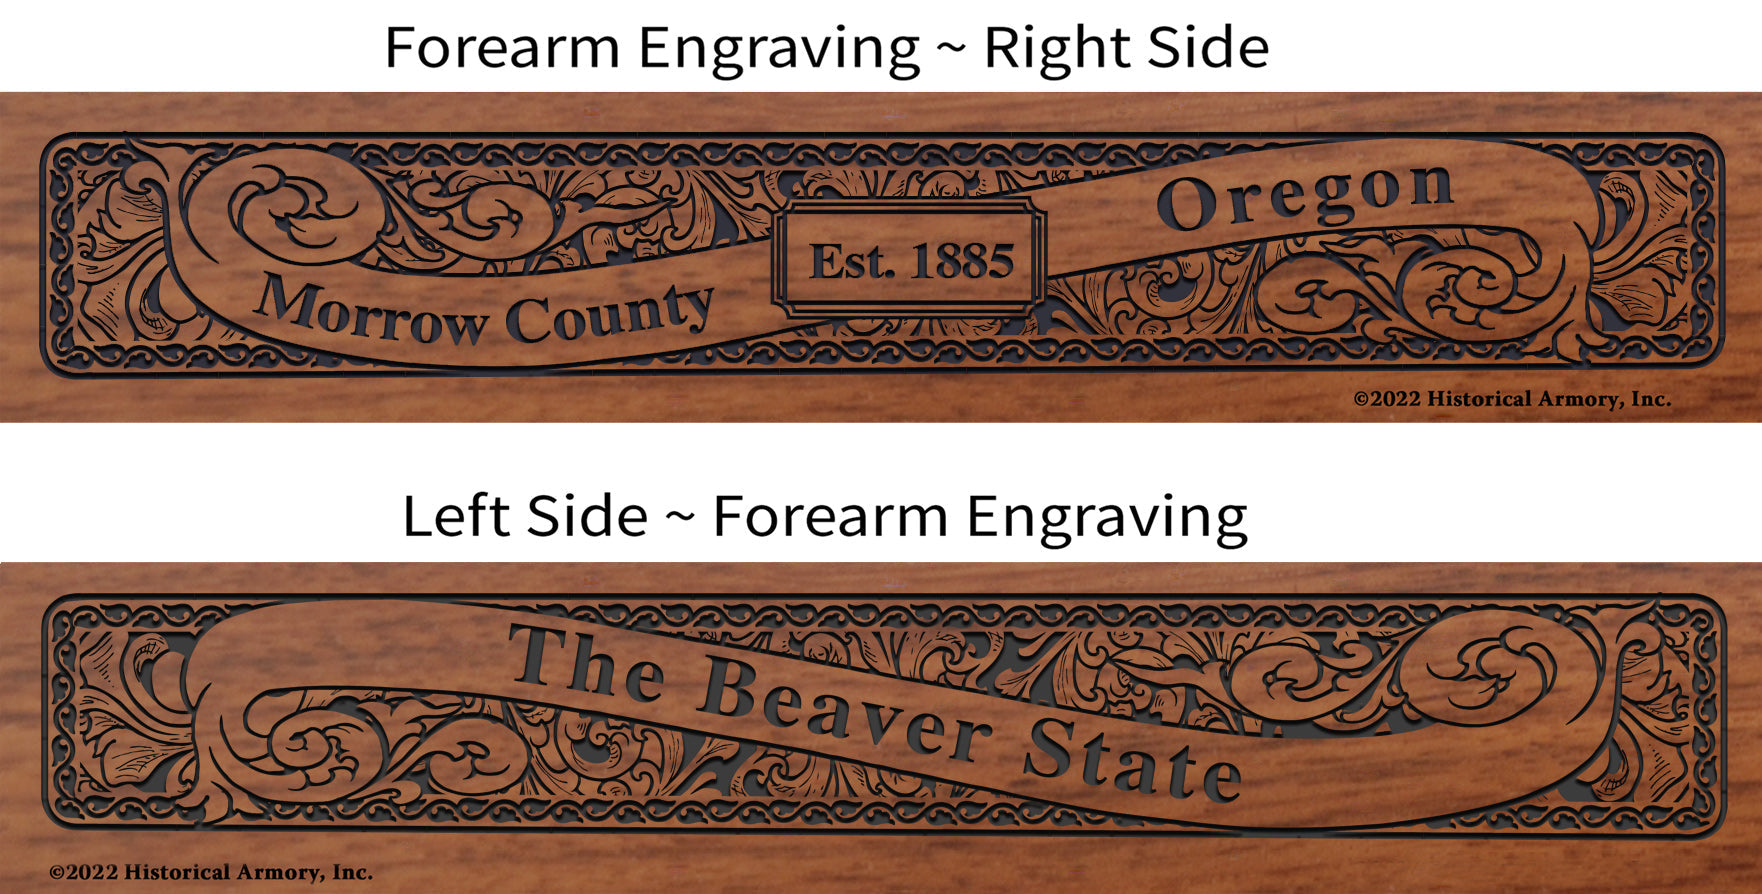 Morrow County Oregon Engraved Rifle Forearm